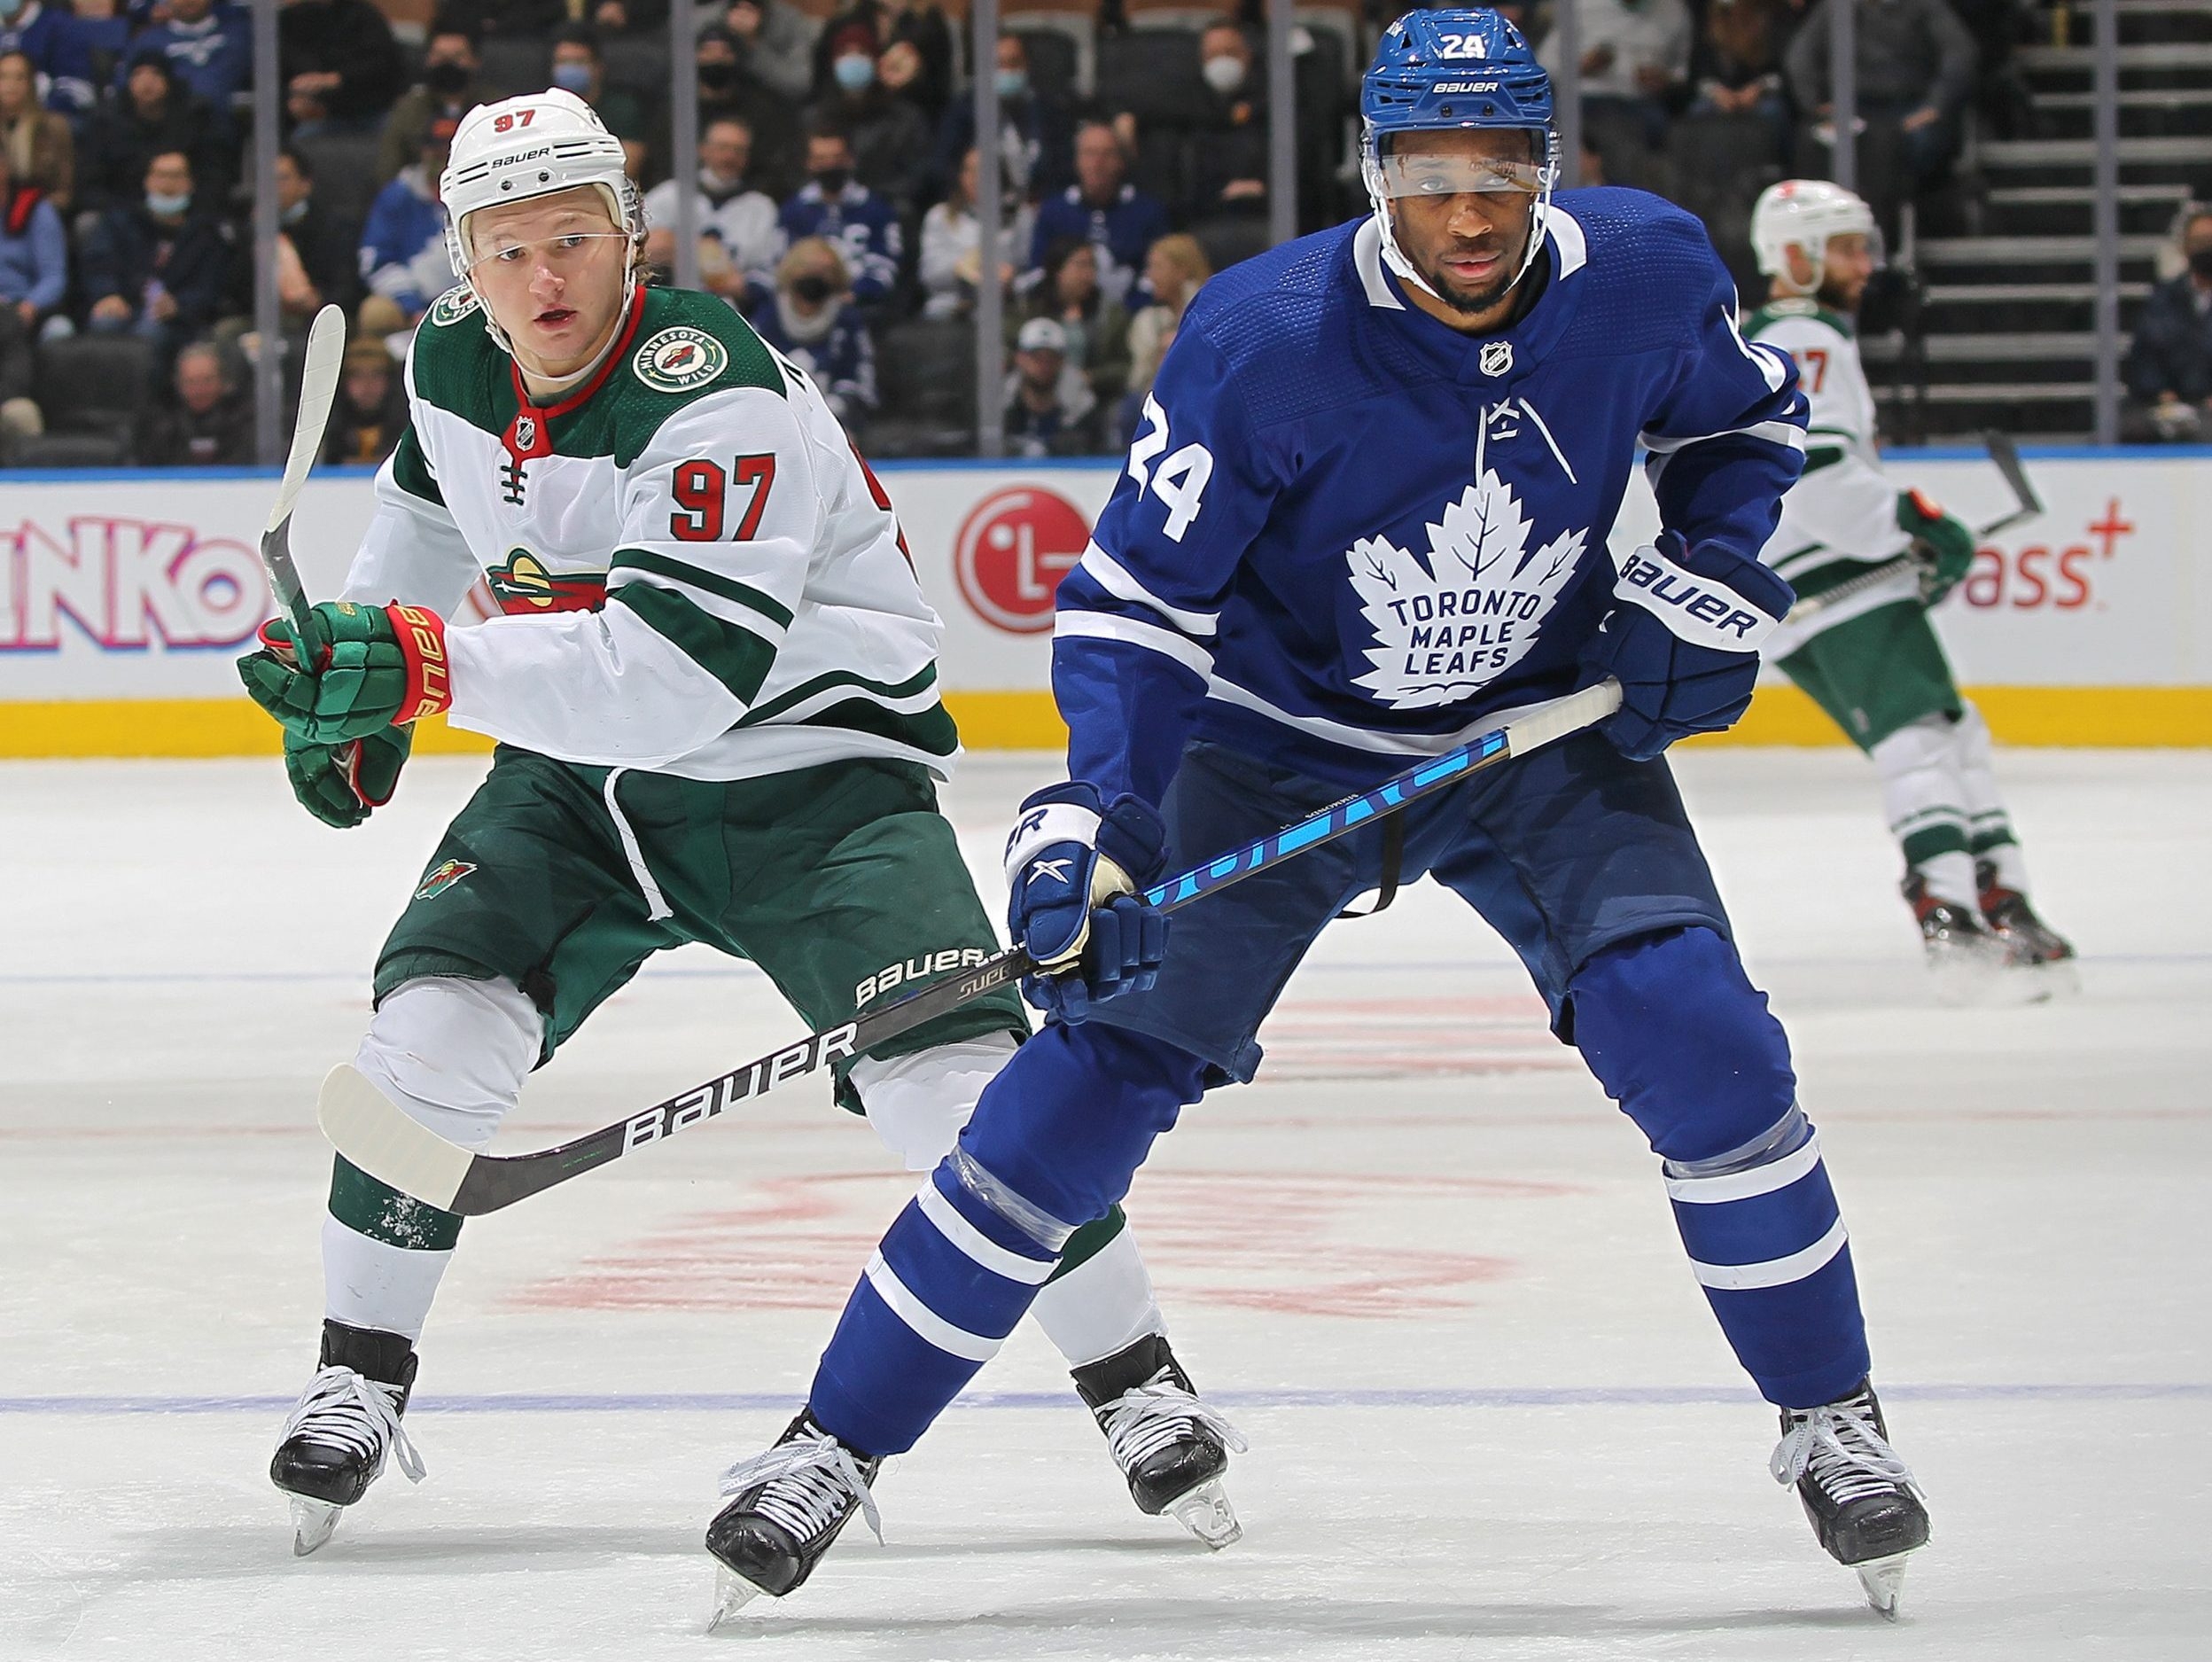 Toronto Maple Leafs: Predicting Next Season's Defensive Pairings